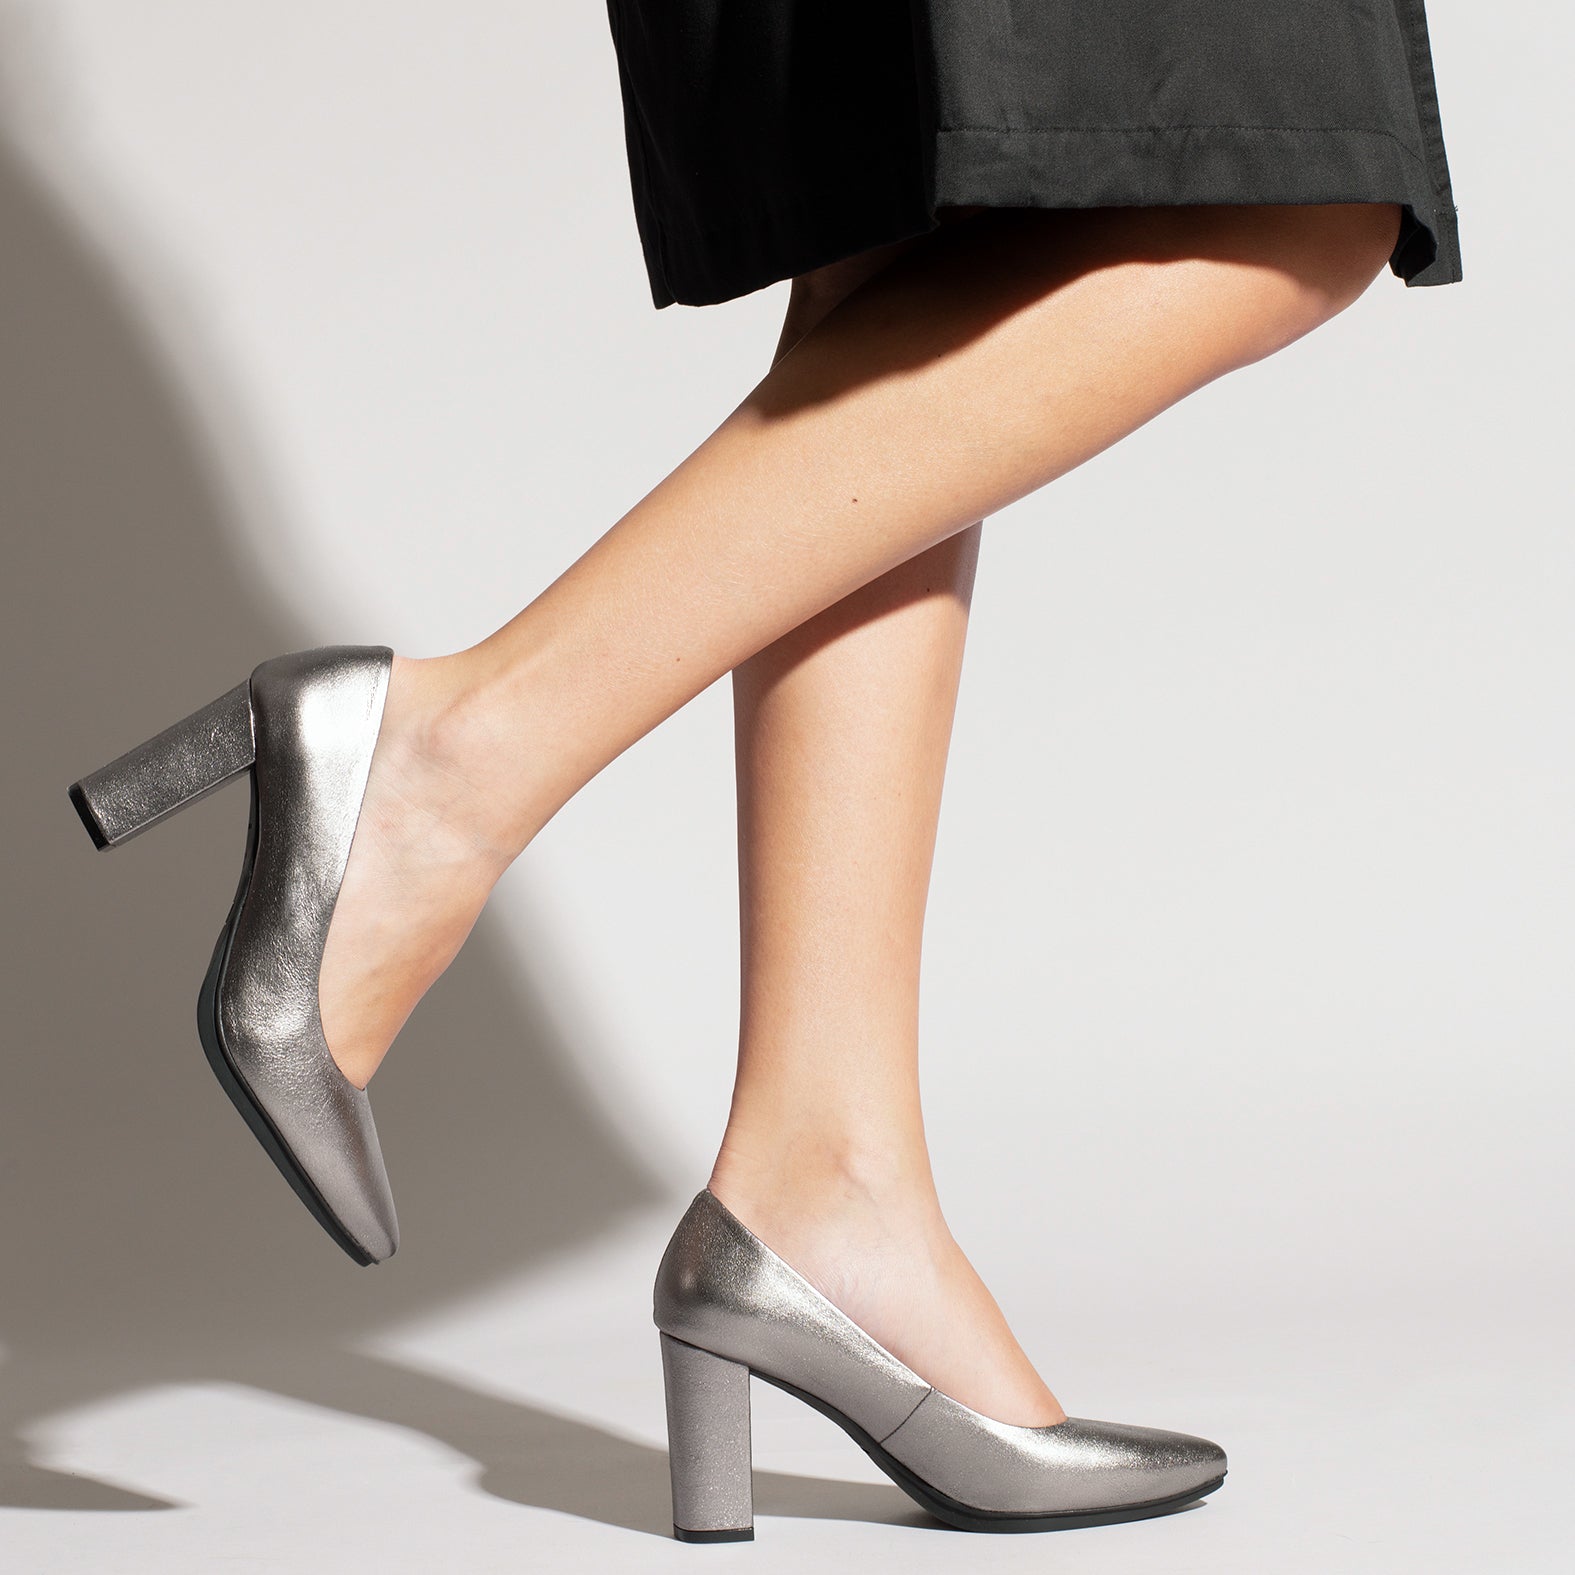 URBAN SPLASH - Zapatos de piel metalizada PLATEADA